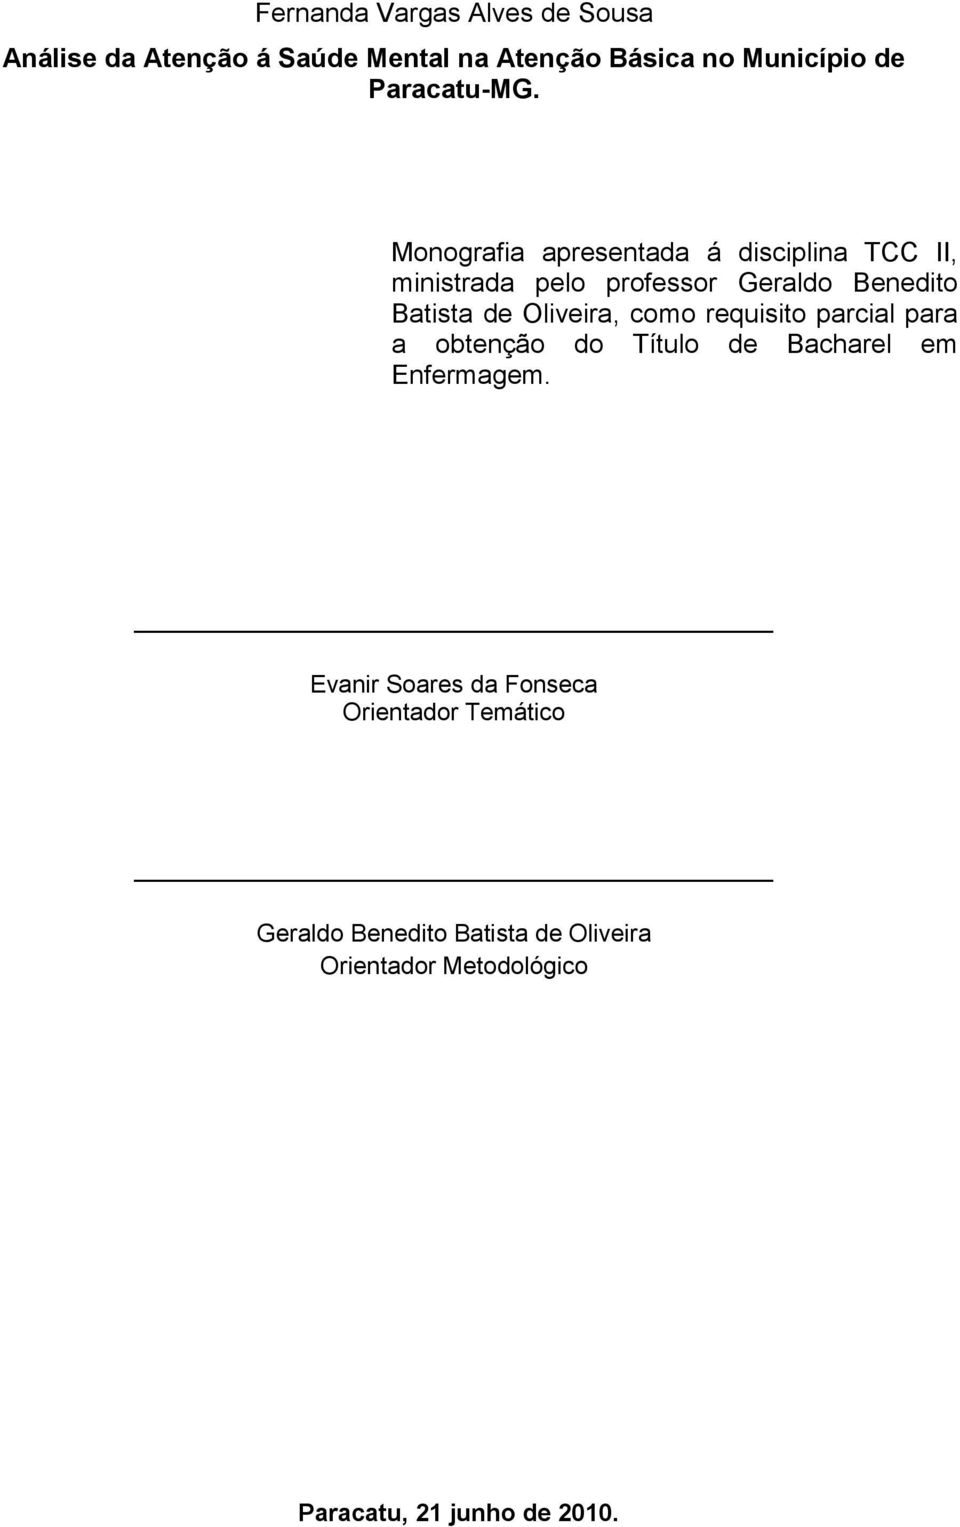 Monografia apresentada á disciplina TCC II, ministrada pelo professor Geraldo Benedito Batista de Oliveira,